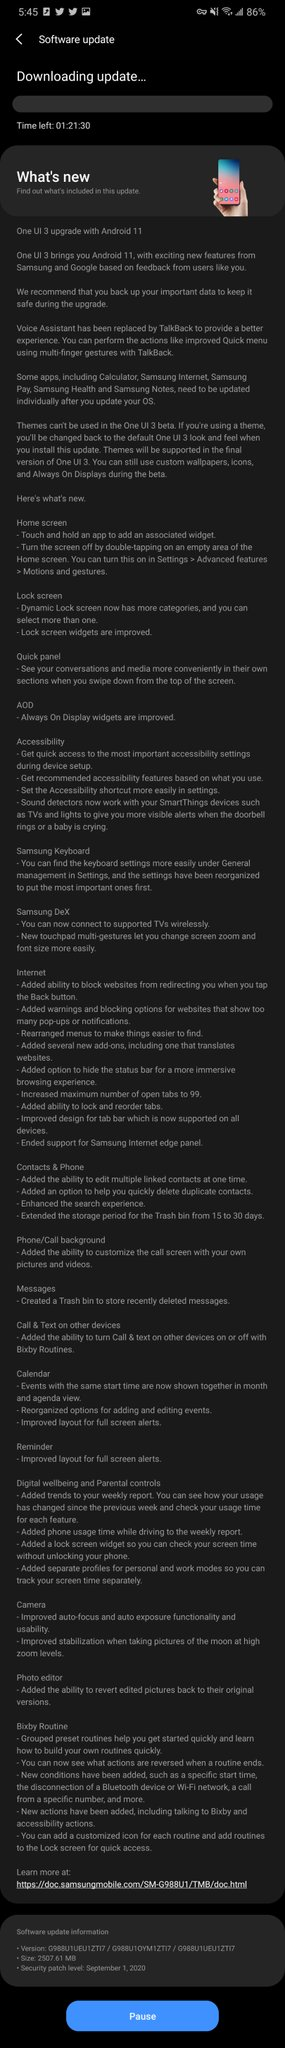 One UI 3.0 changelog (image via SamsungRydah on Twitter)